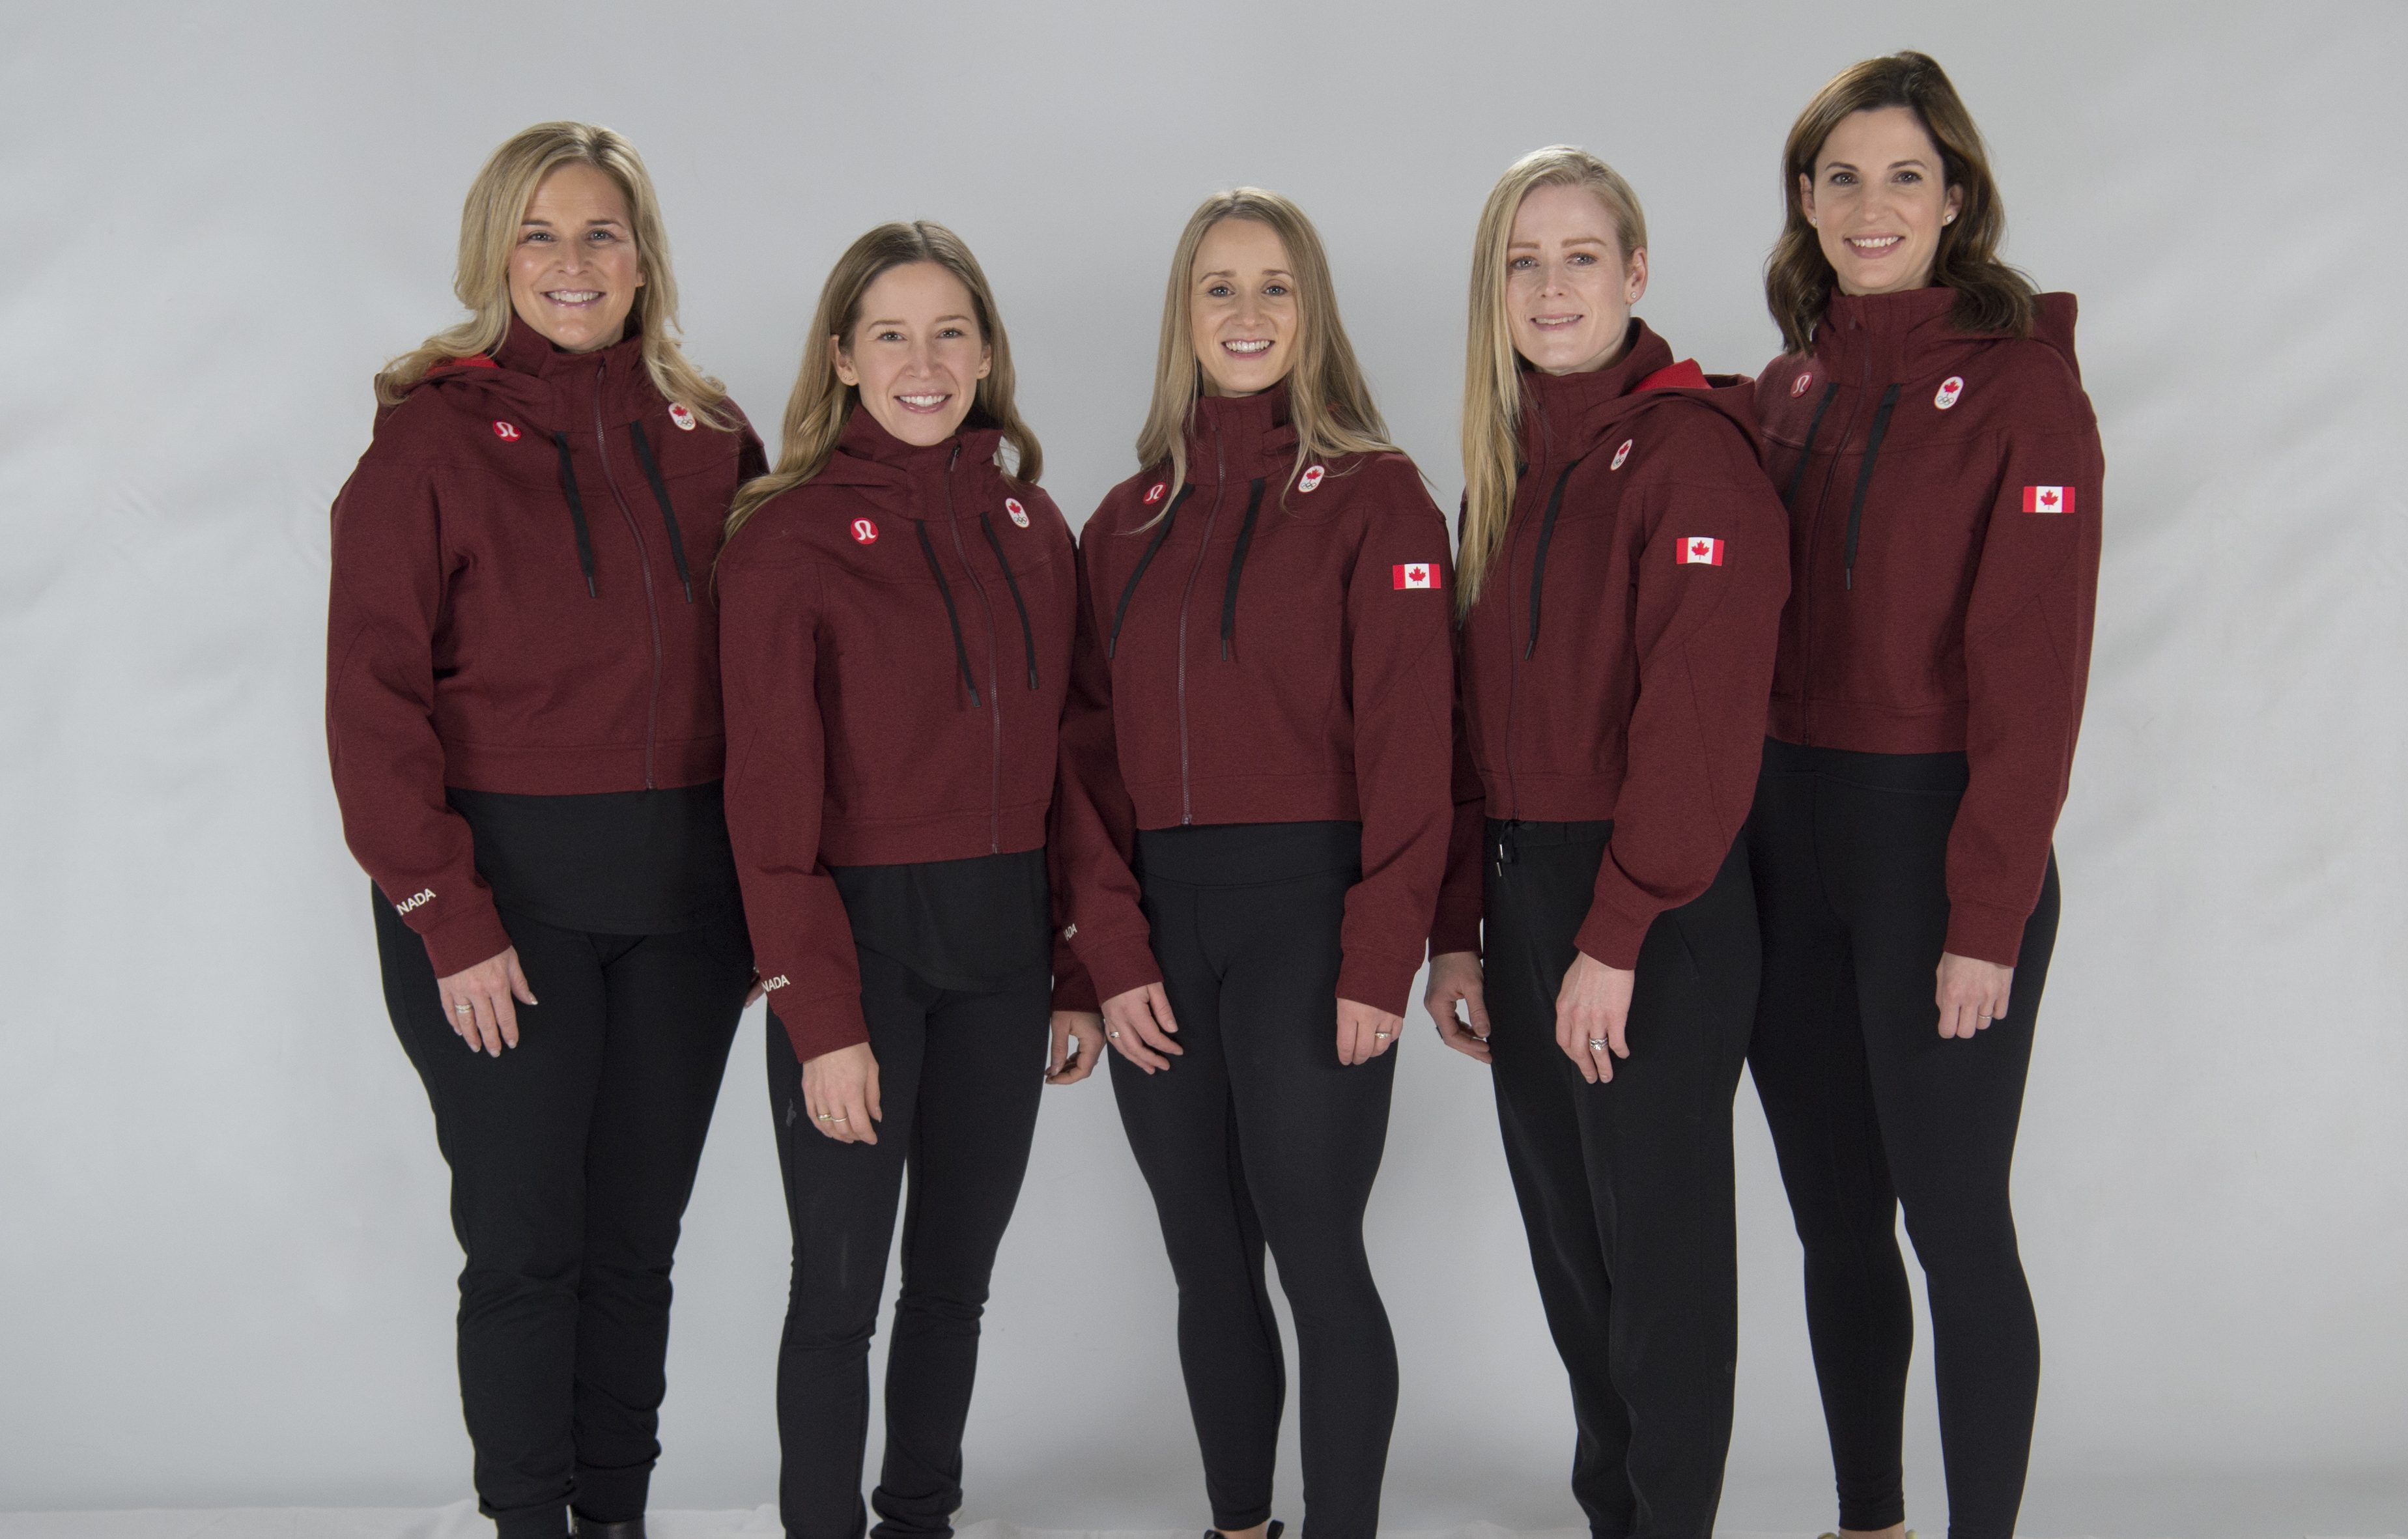 Team Jennifer Jones pose in their Team Canada lululemon jackets